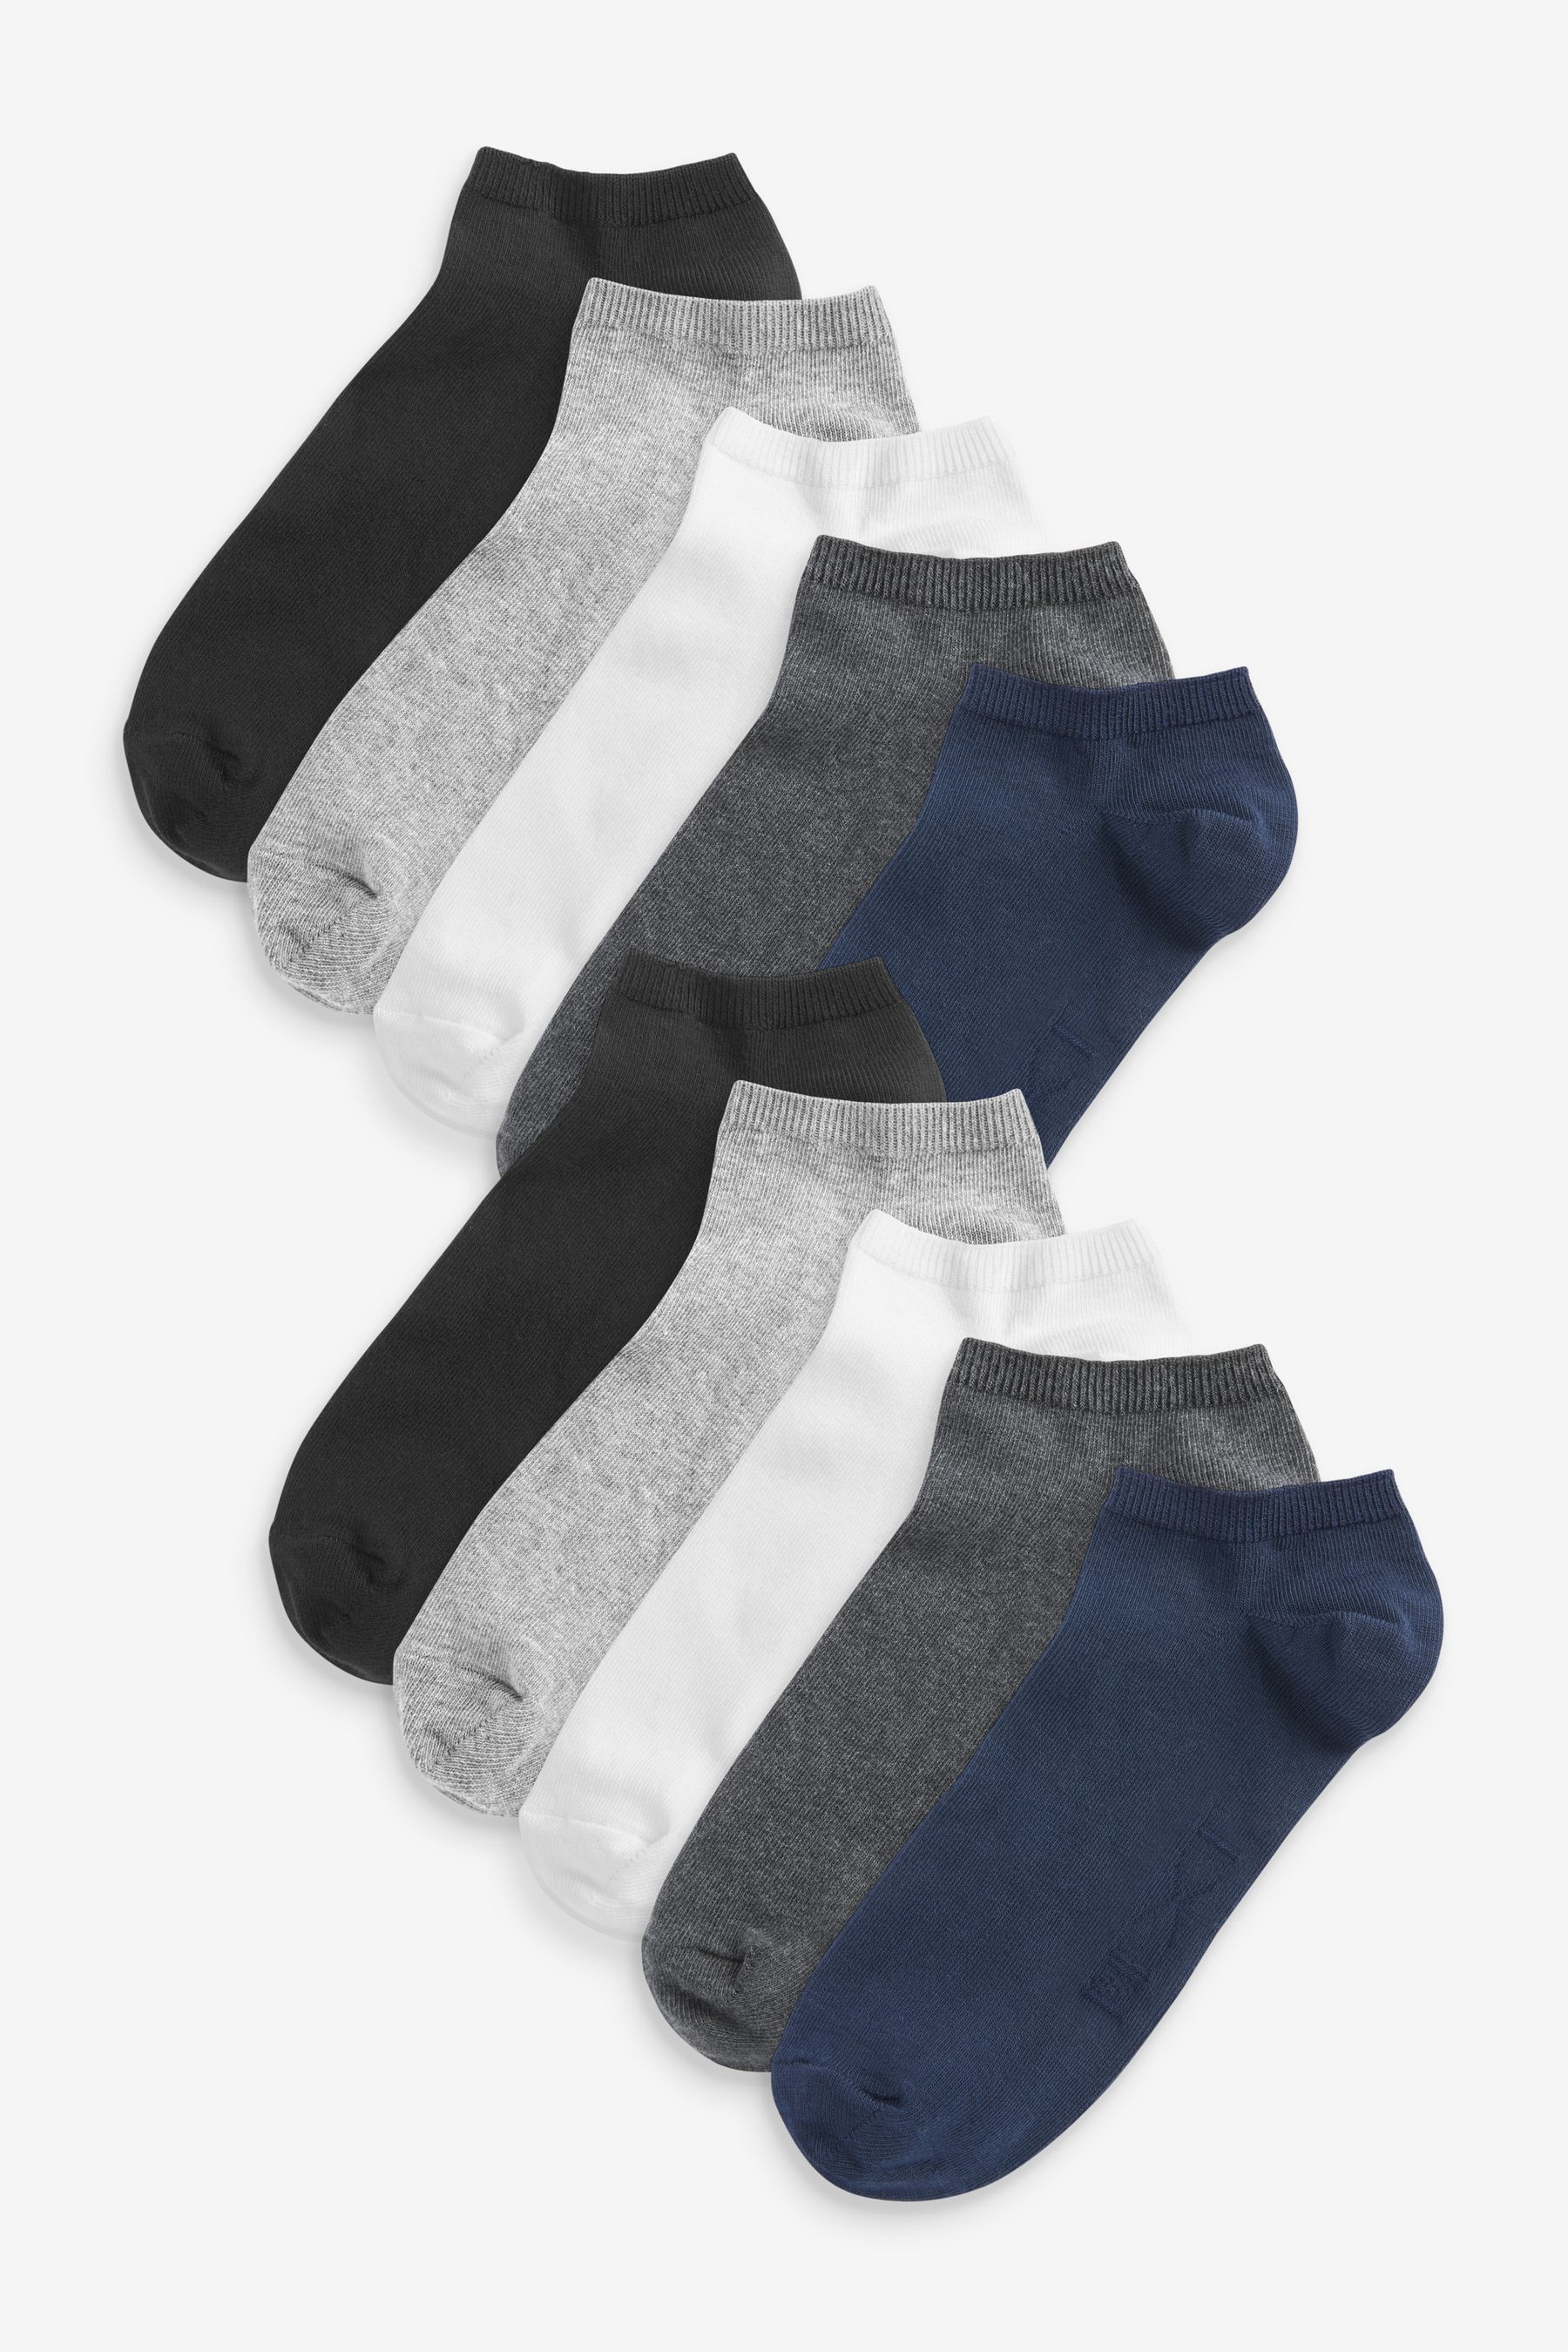 Buy Multi Trainer Socks from the Next UK online shop